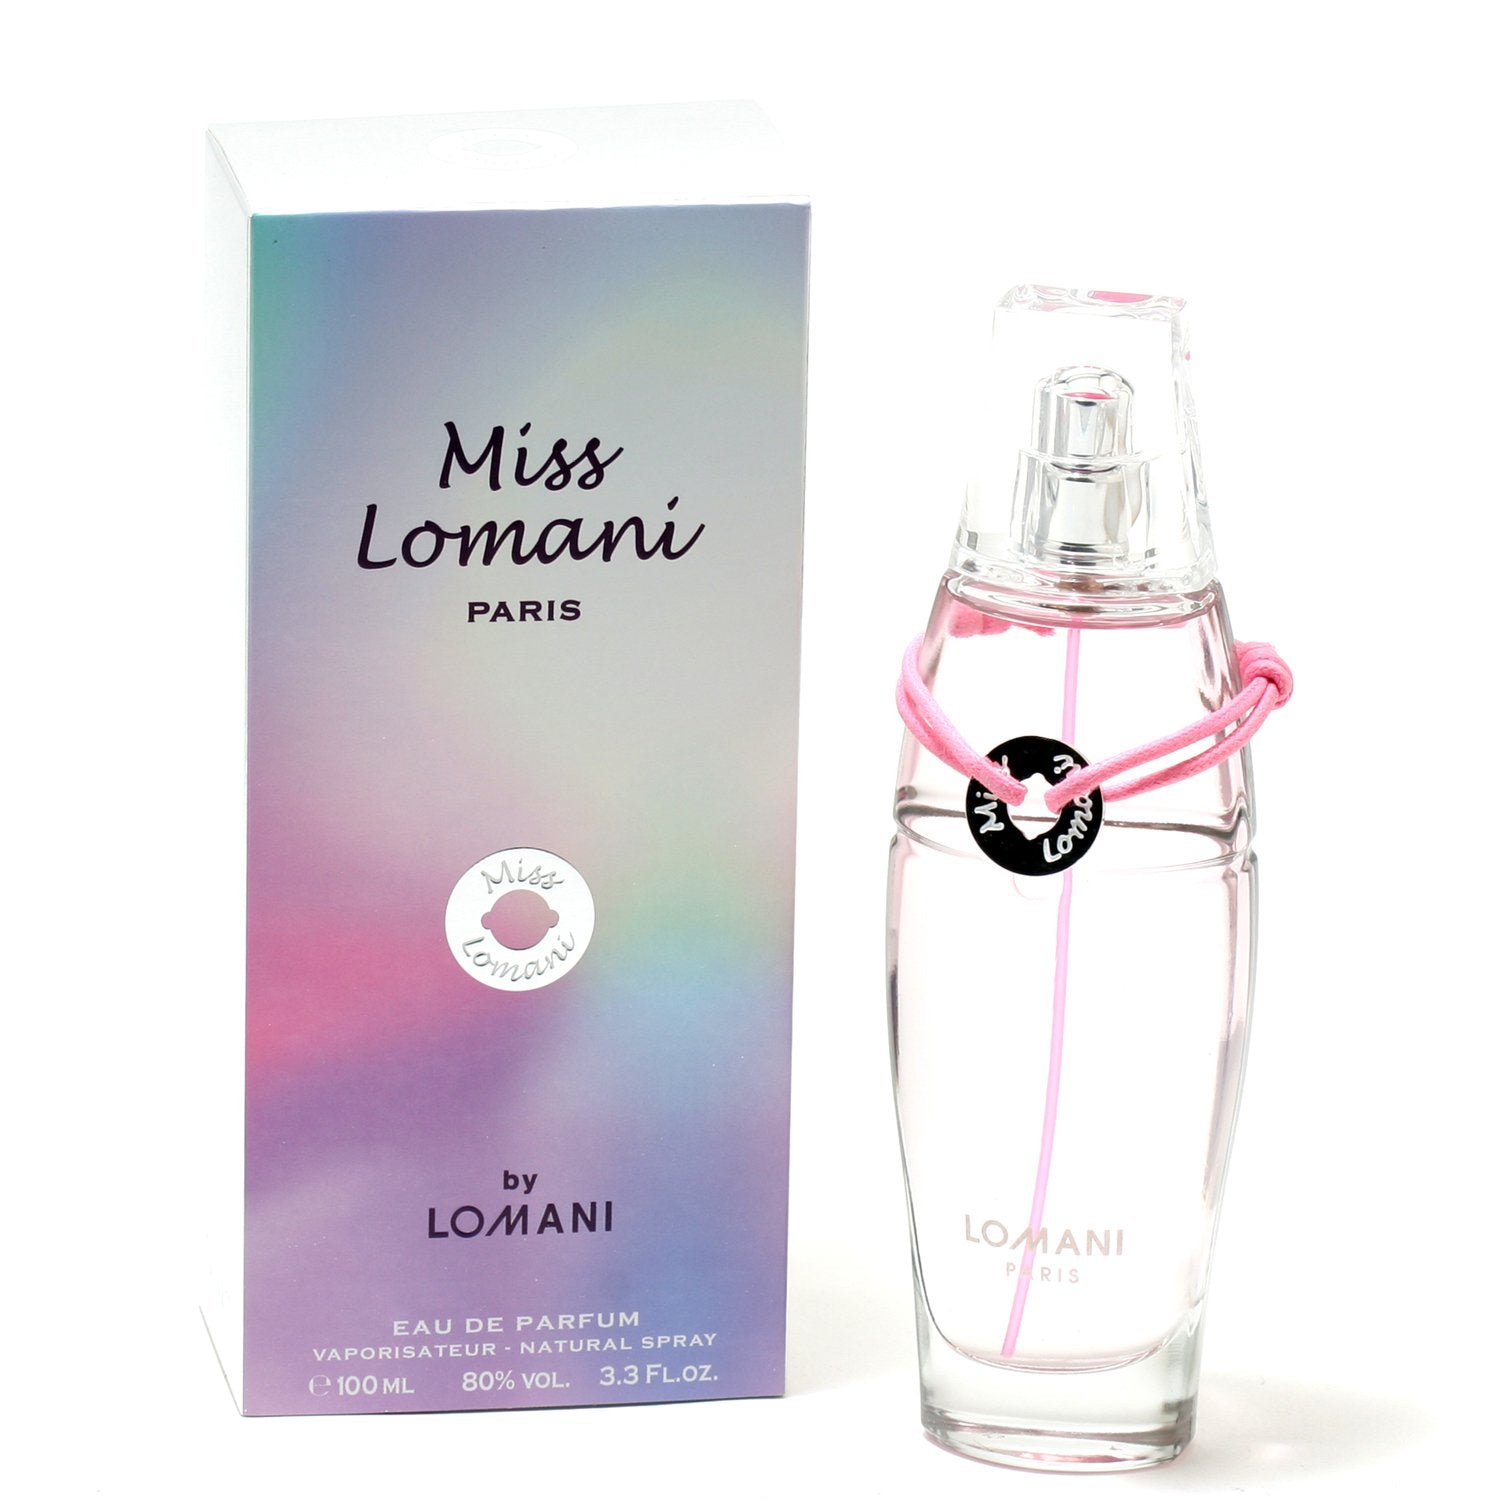 Perfume - MISS LOMANI FOR WOMEN BY LOMANI - EAU DE PARFUM SPRAY, 3.4 OZ